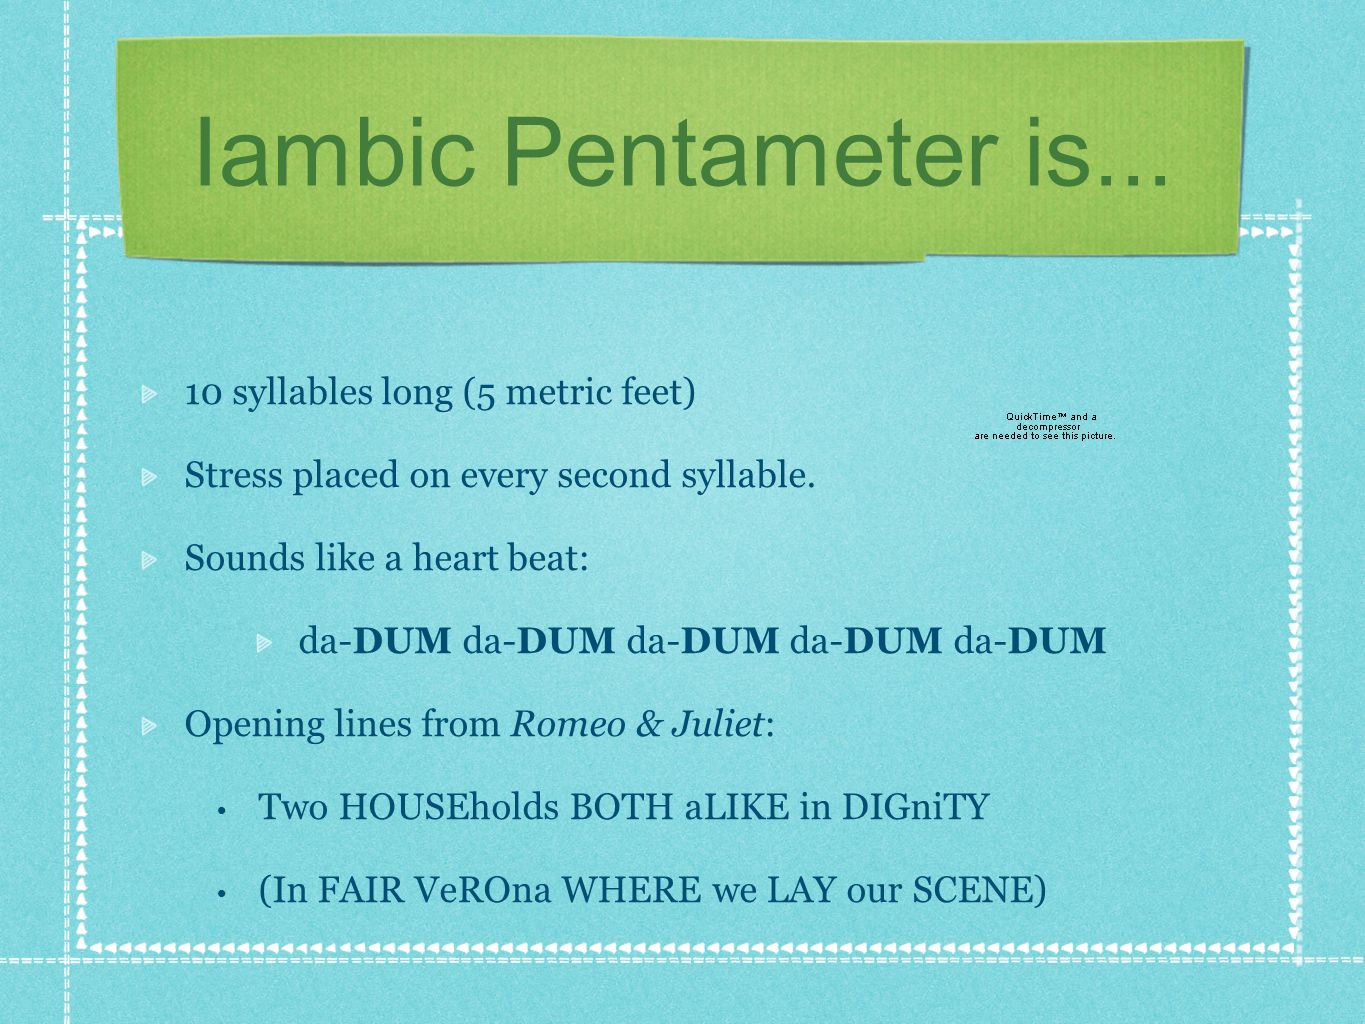 Iambic Pentameter is syllables long (5 metric feet)